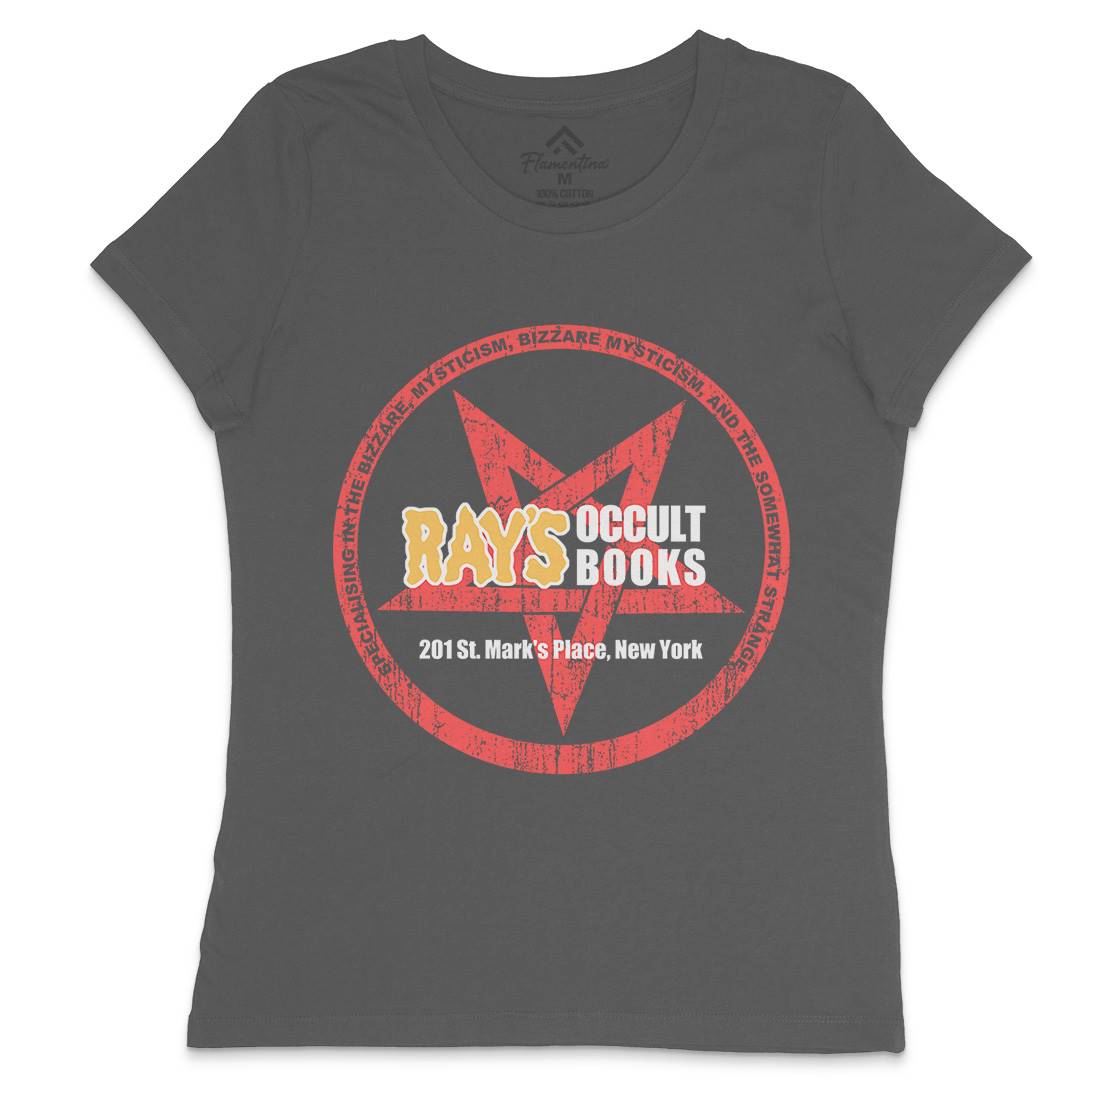 Rays Occult Books Womens Crew Neck T-Shirt Horror D395